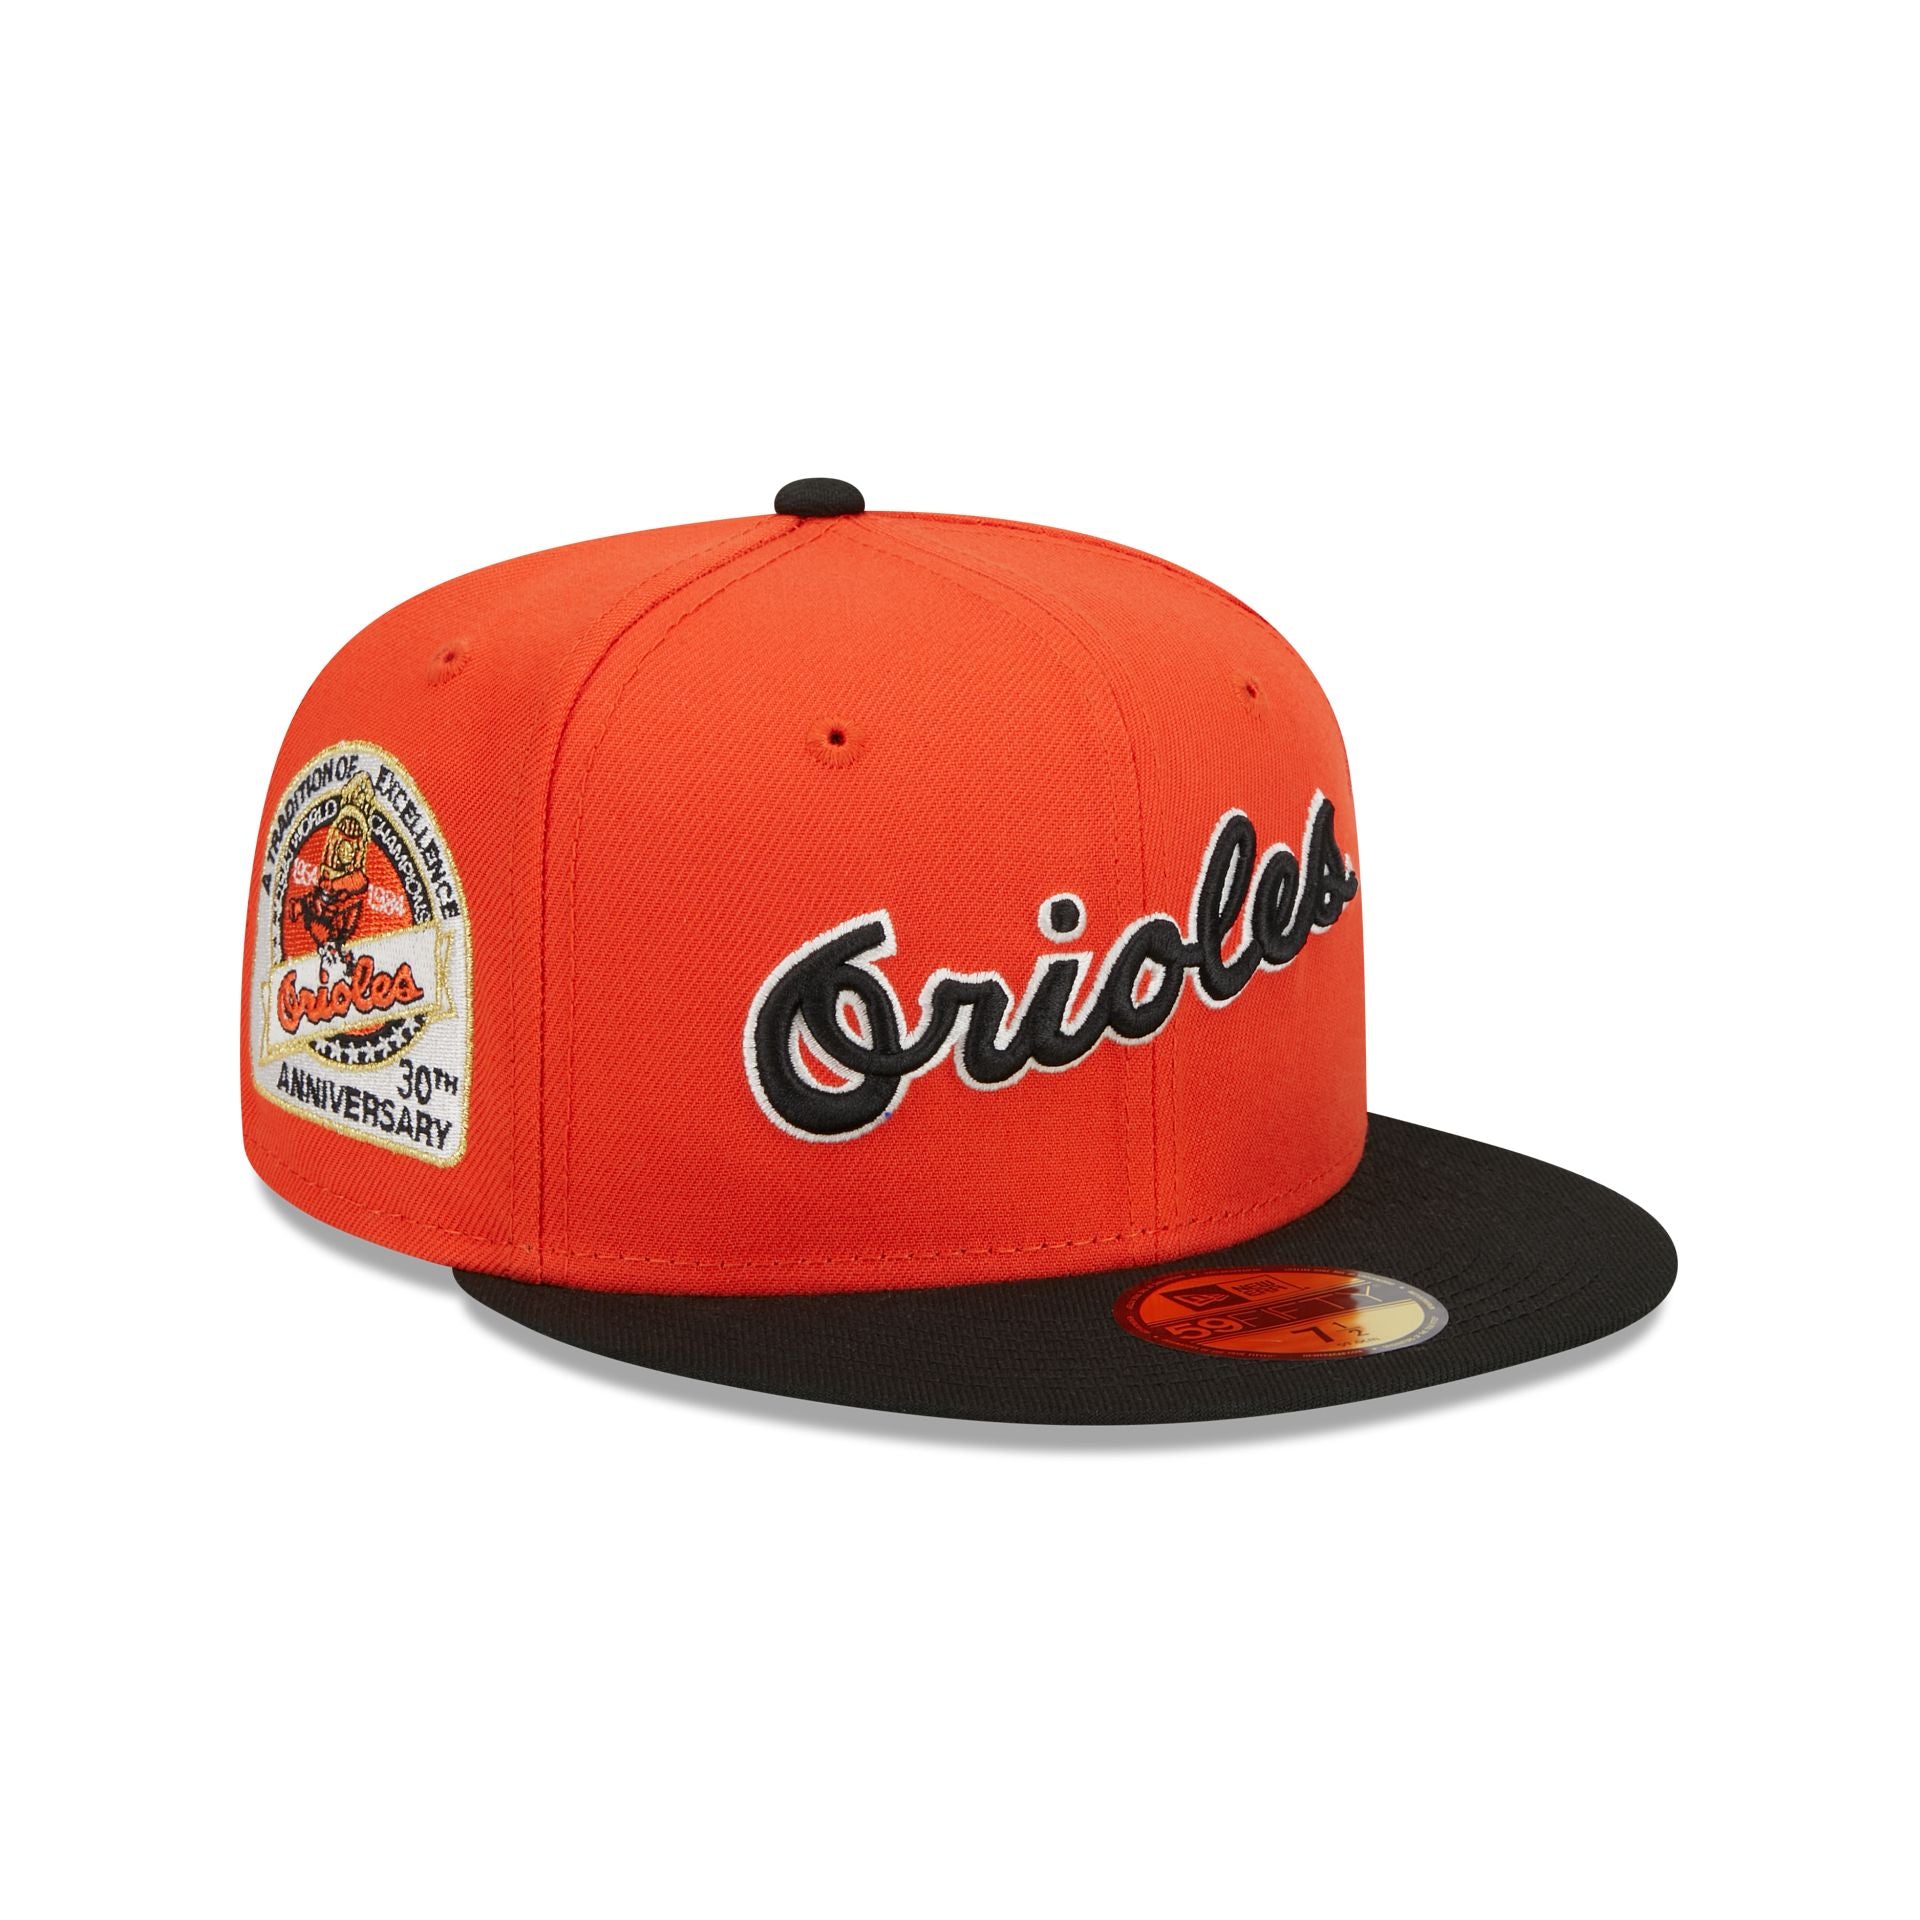 New Era 59FIFTY Baltimore Orioles Retro Jersey Script Fitted Hat 7 1/2 / Orange/Black/Green